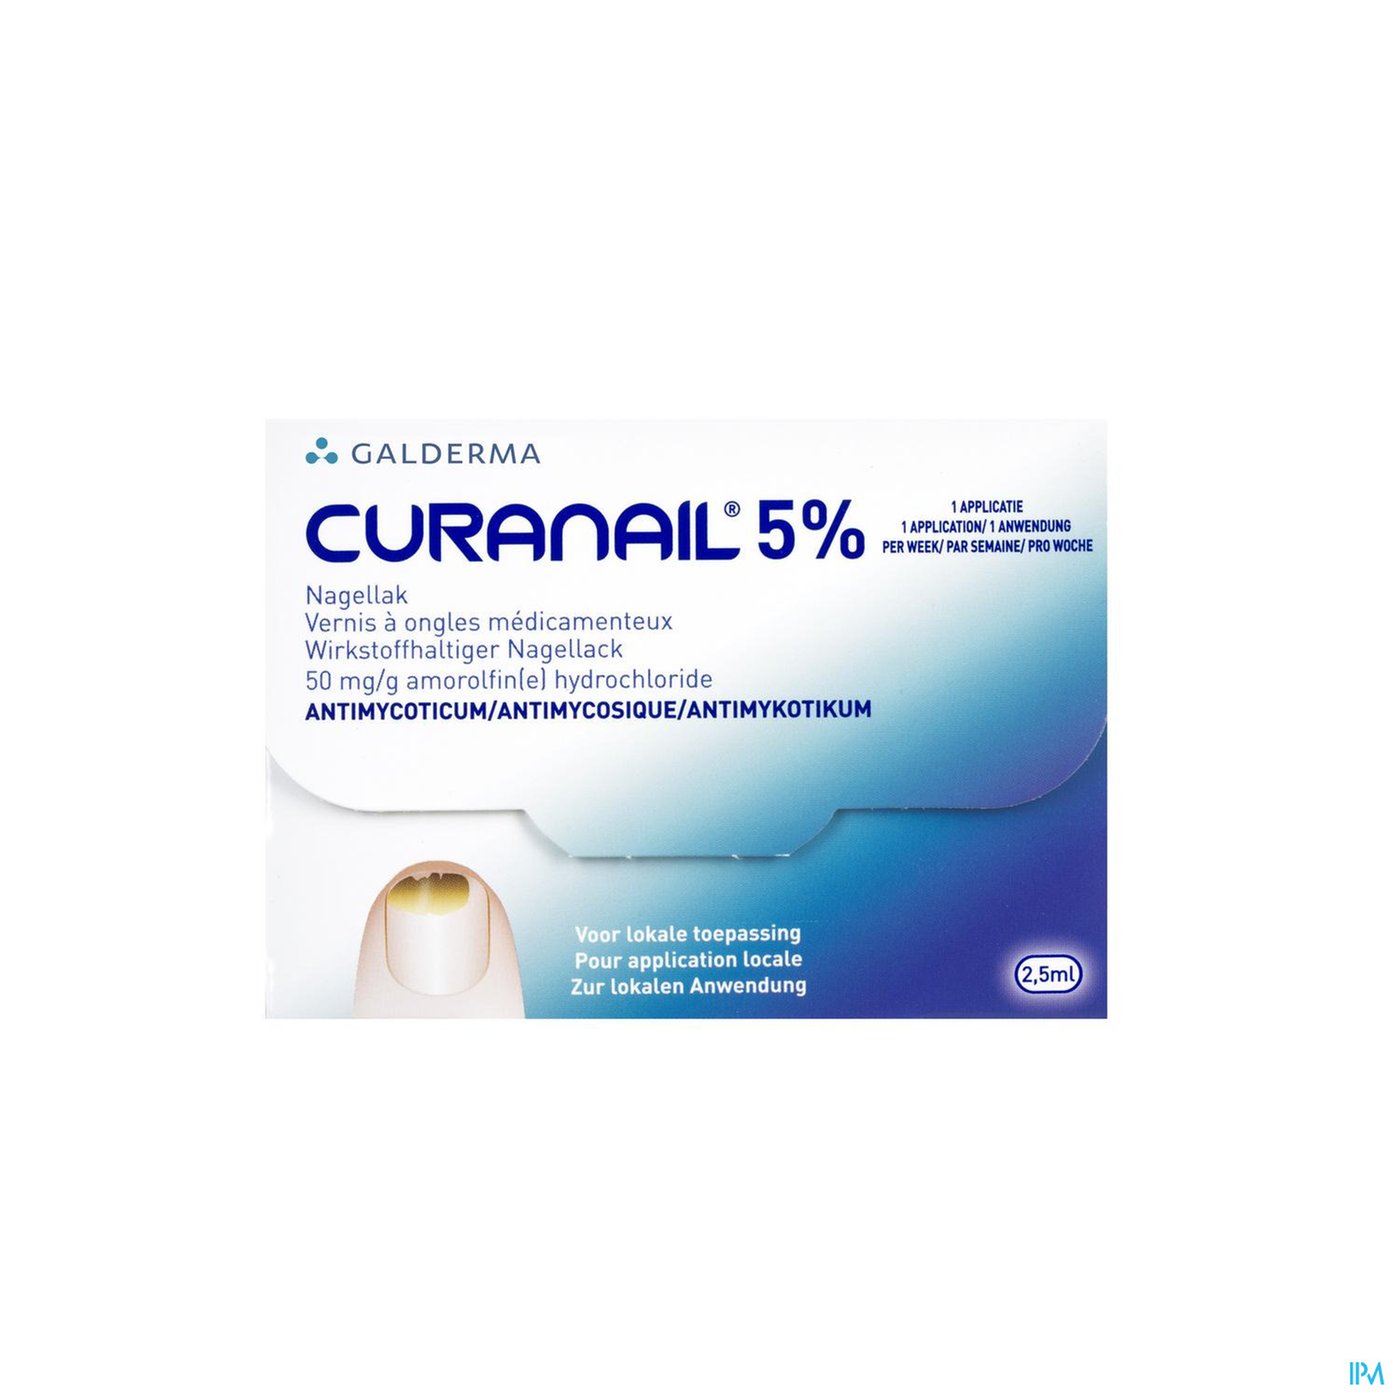 Curanail 5% Nagellak 2,5ml productshot